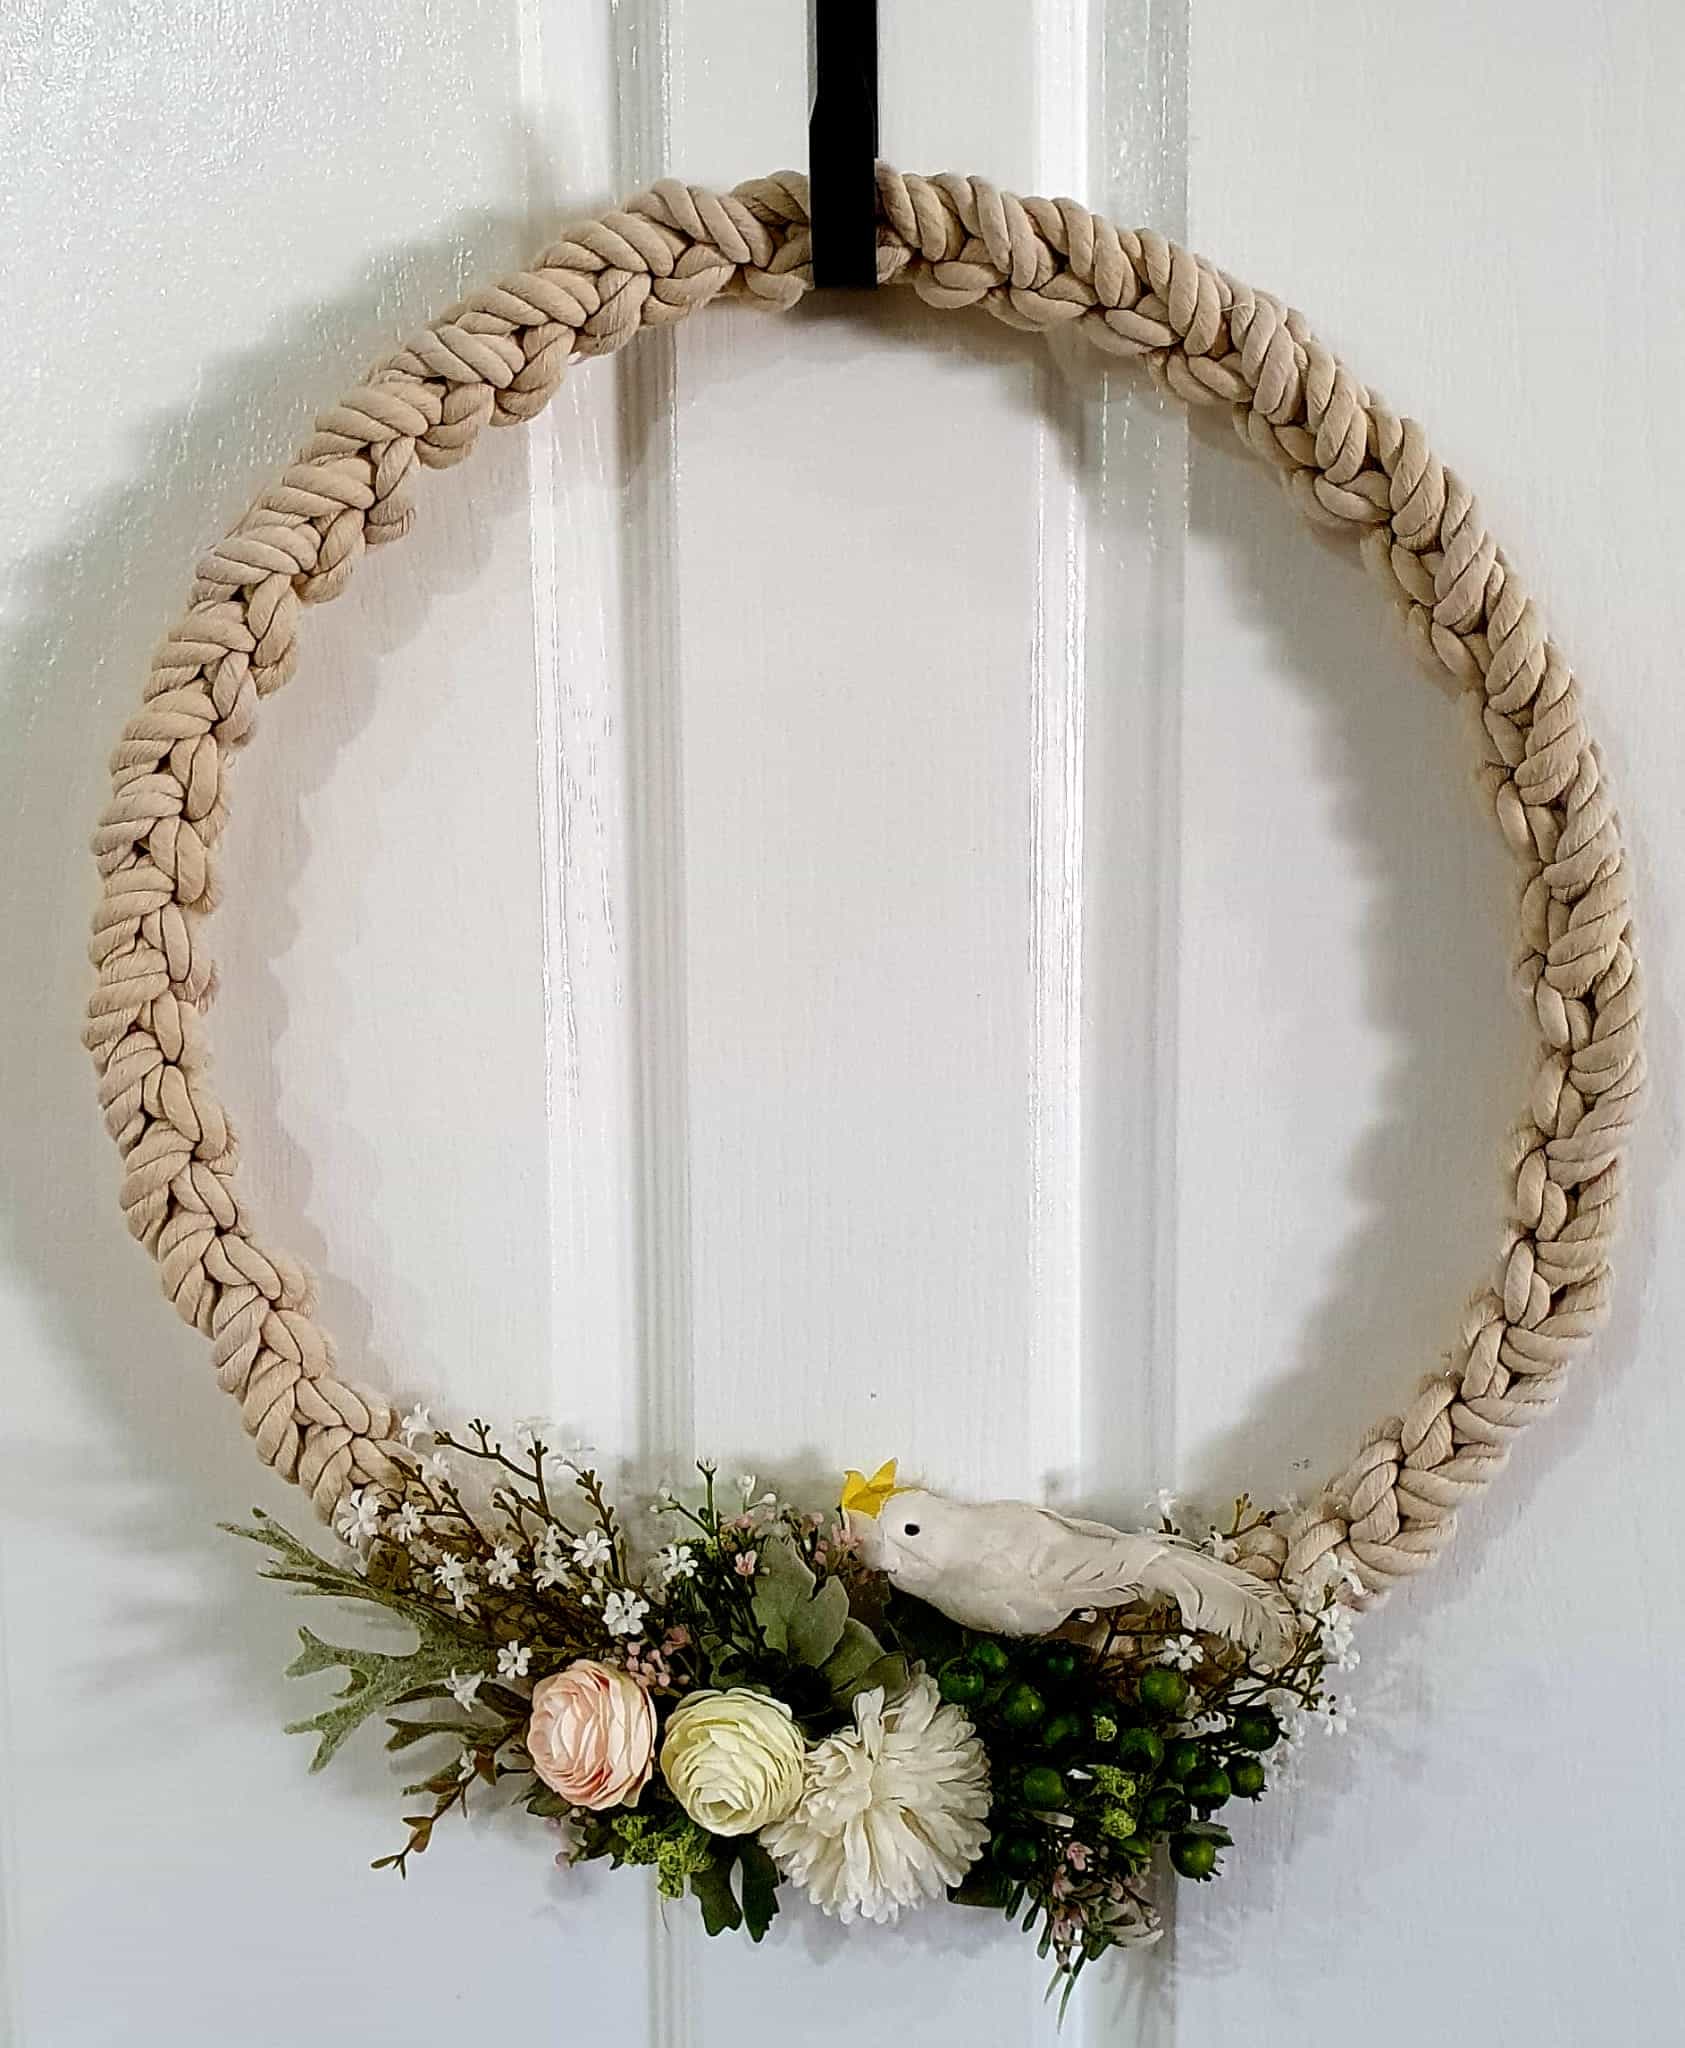 Braided Cotton Rope Wreath